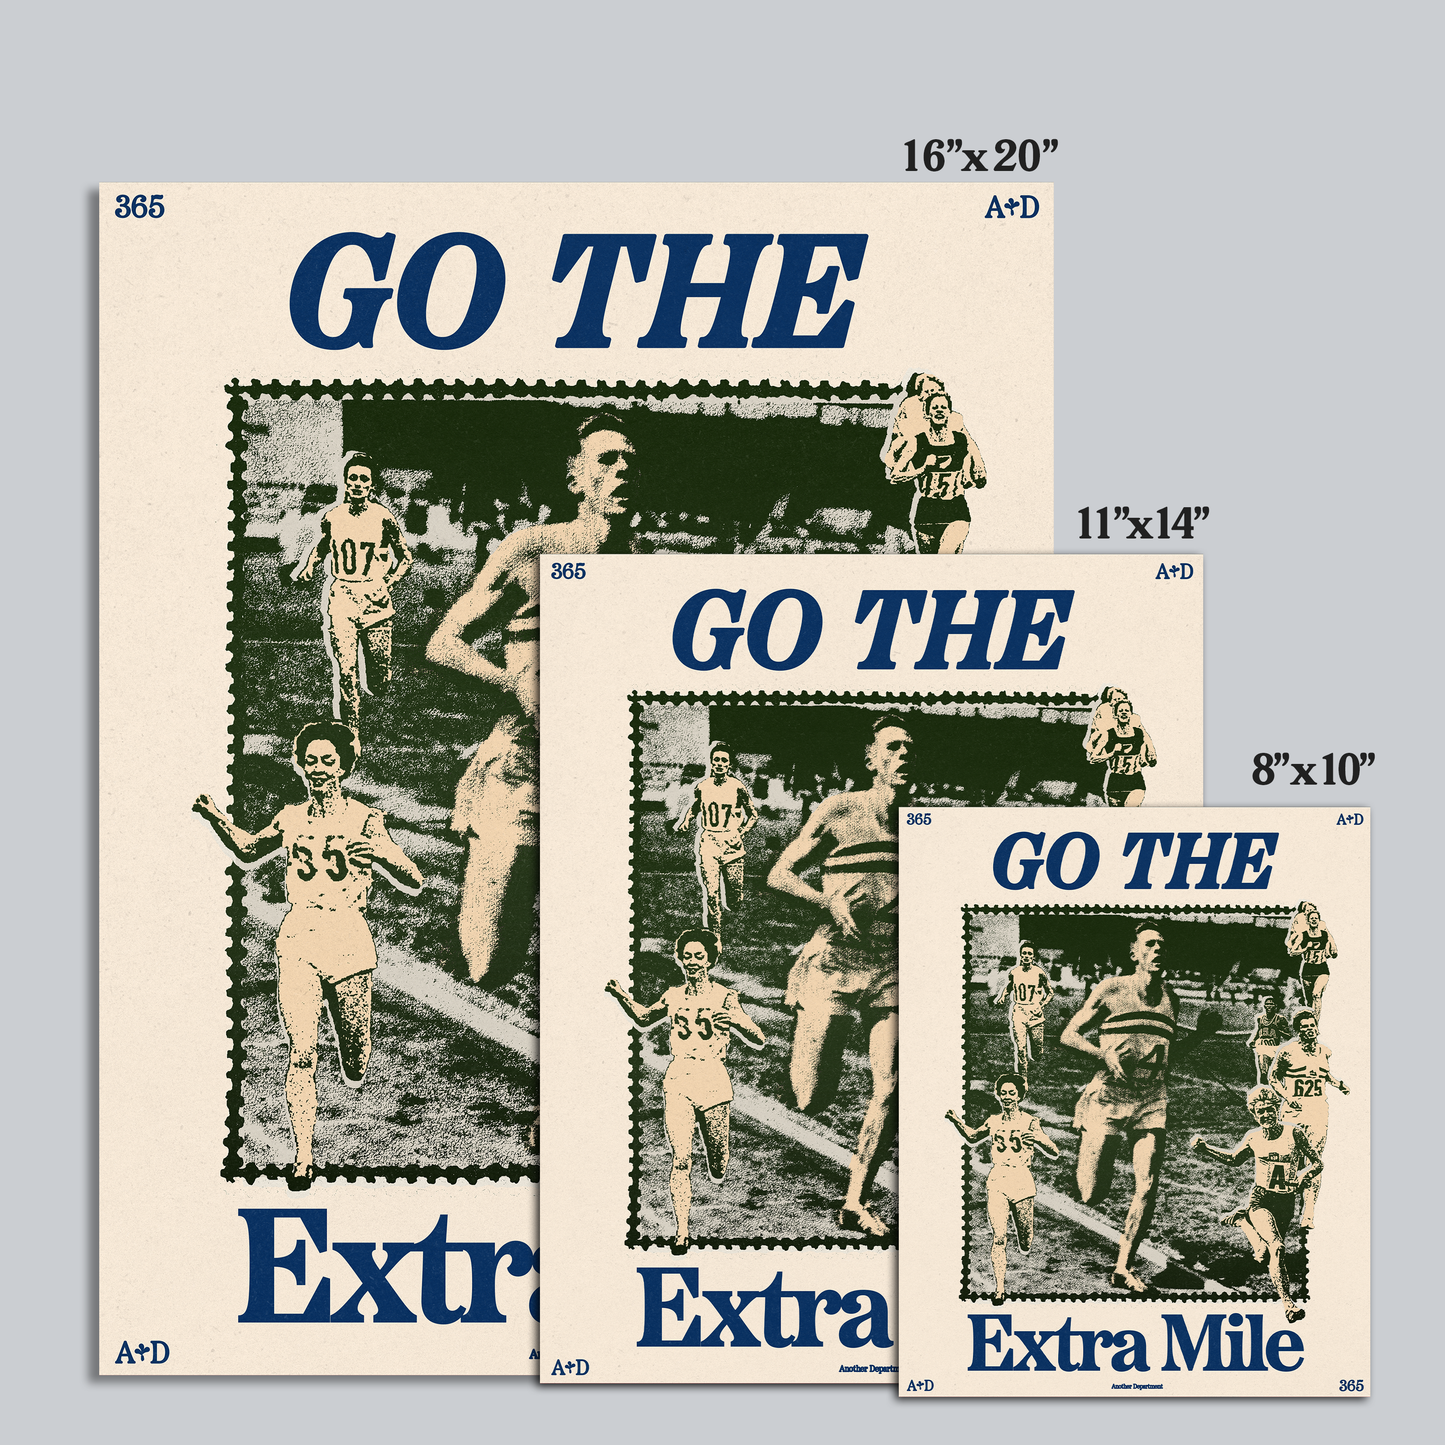 096 - Extra Mile